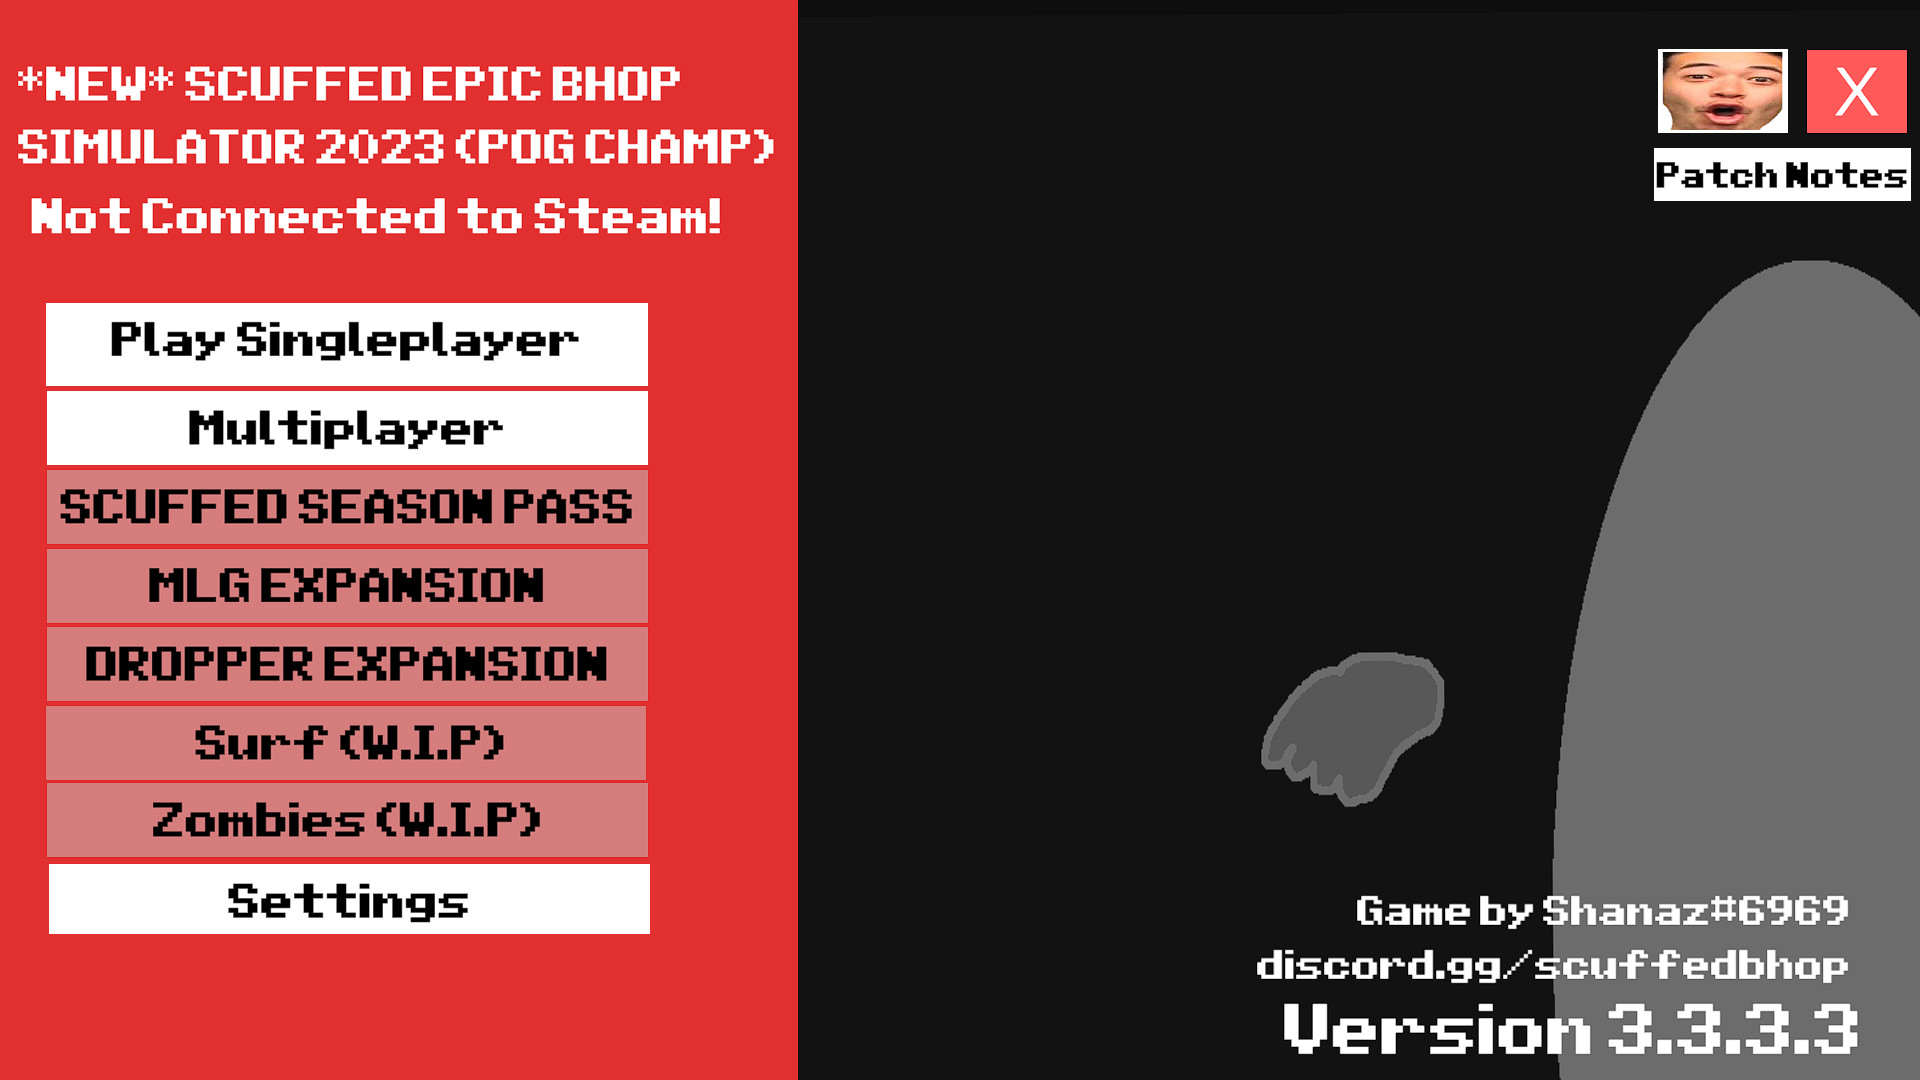 New Scuffed Epic Bhop Simulator 2023 Pog Champ On Steam - roblox bhop wiki